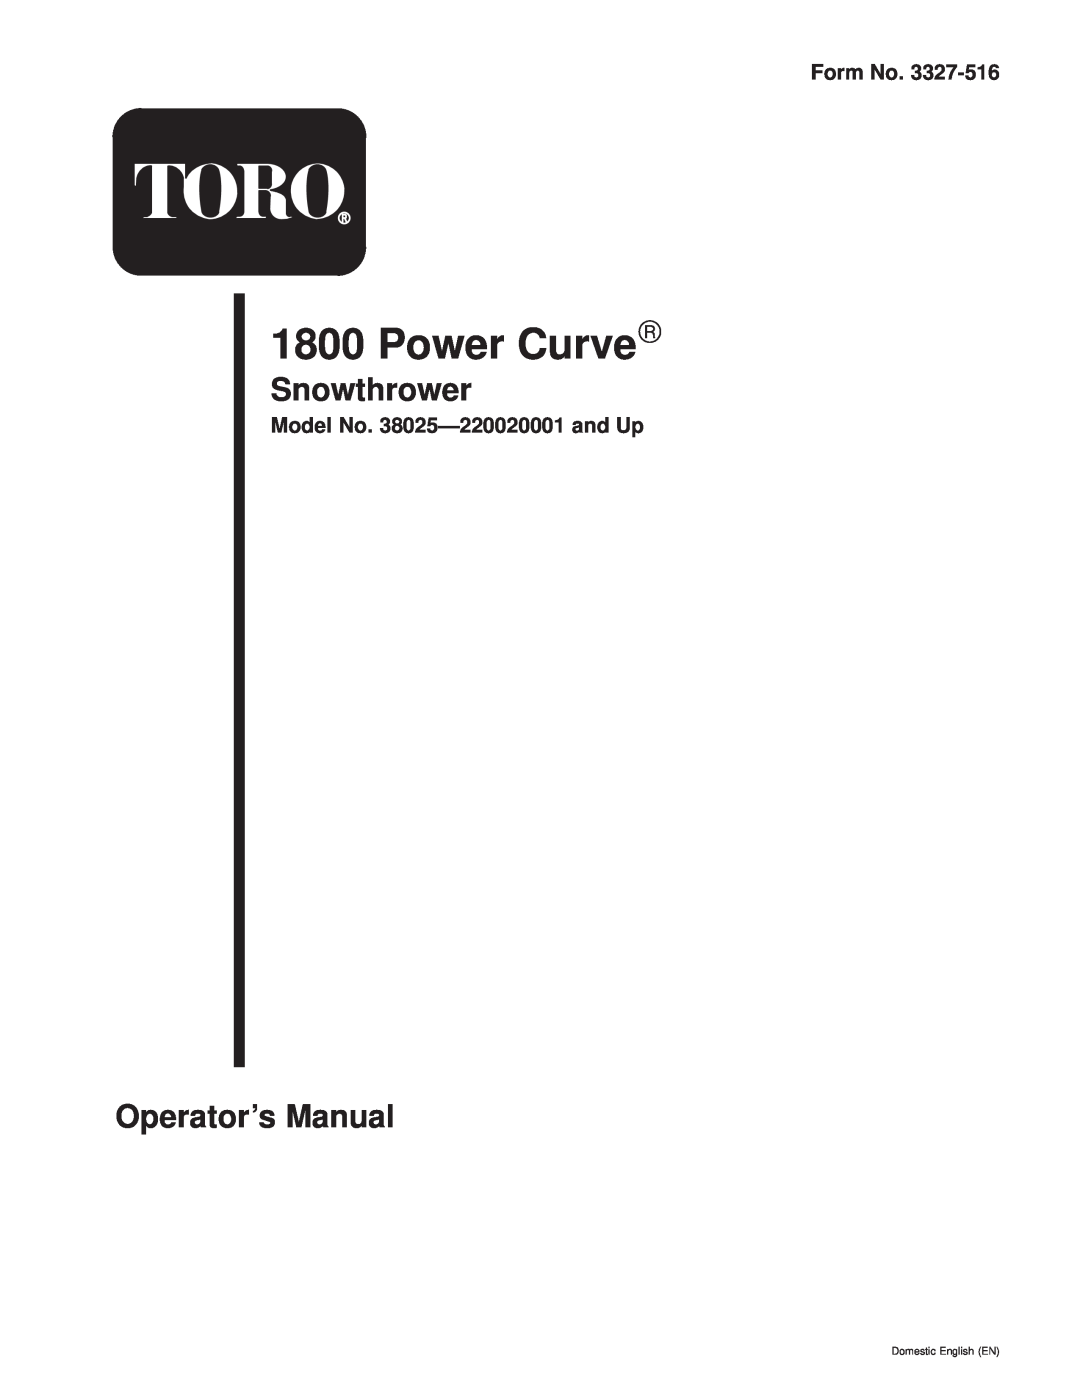 Toro 3.80E+13 manual Power Curve, Form No, Model No. 38025Ð220020001 and Up, Snowthrower, Operators Manual 